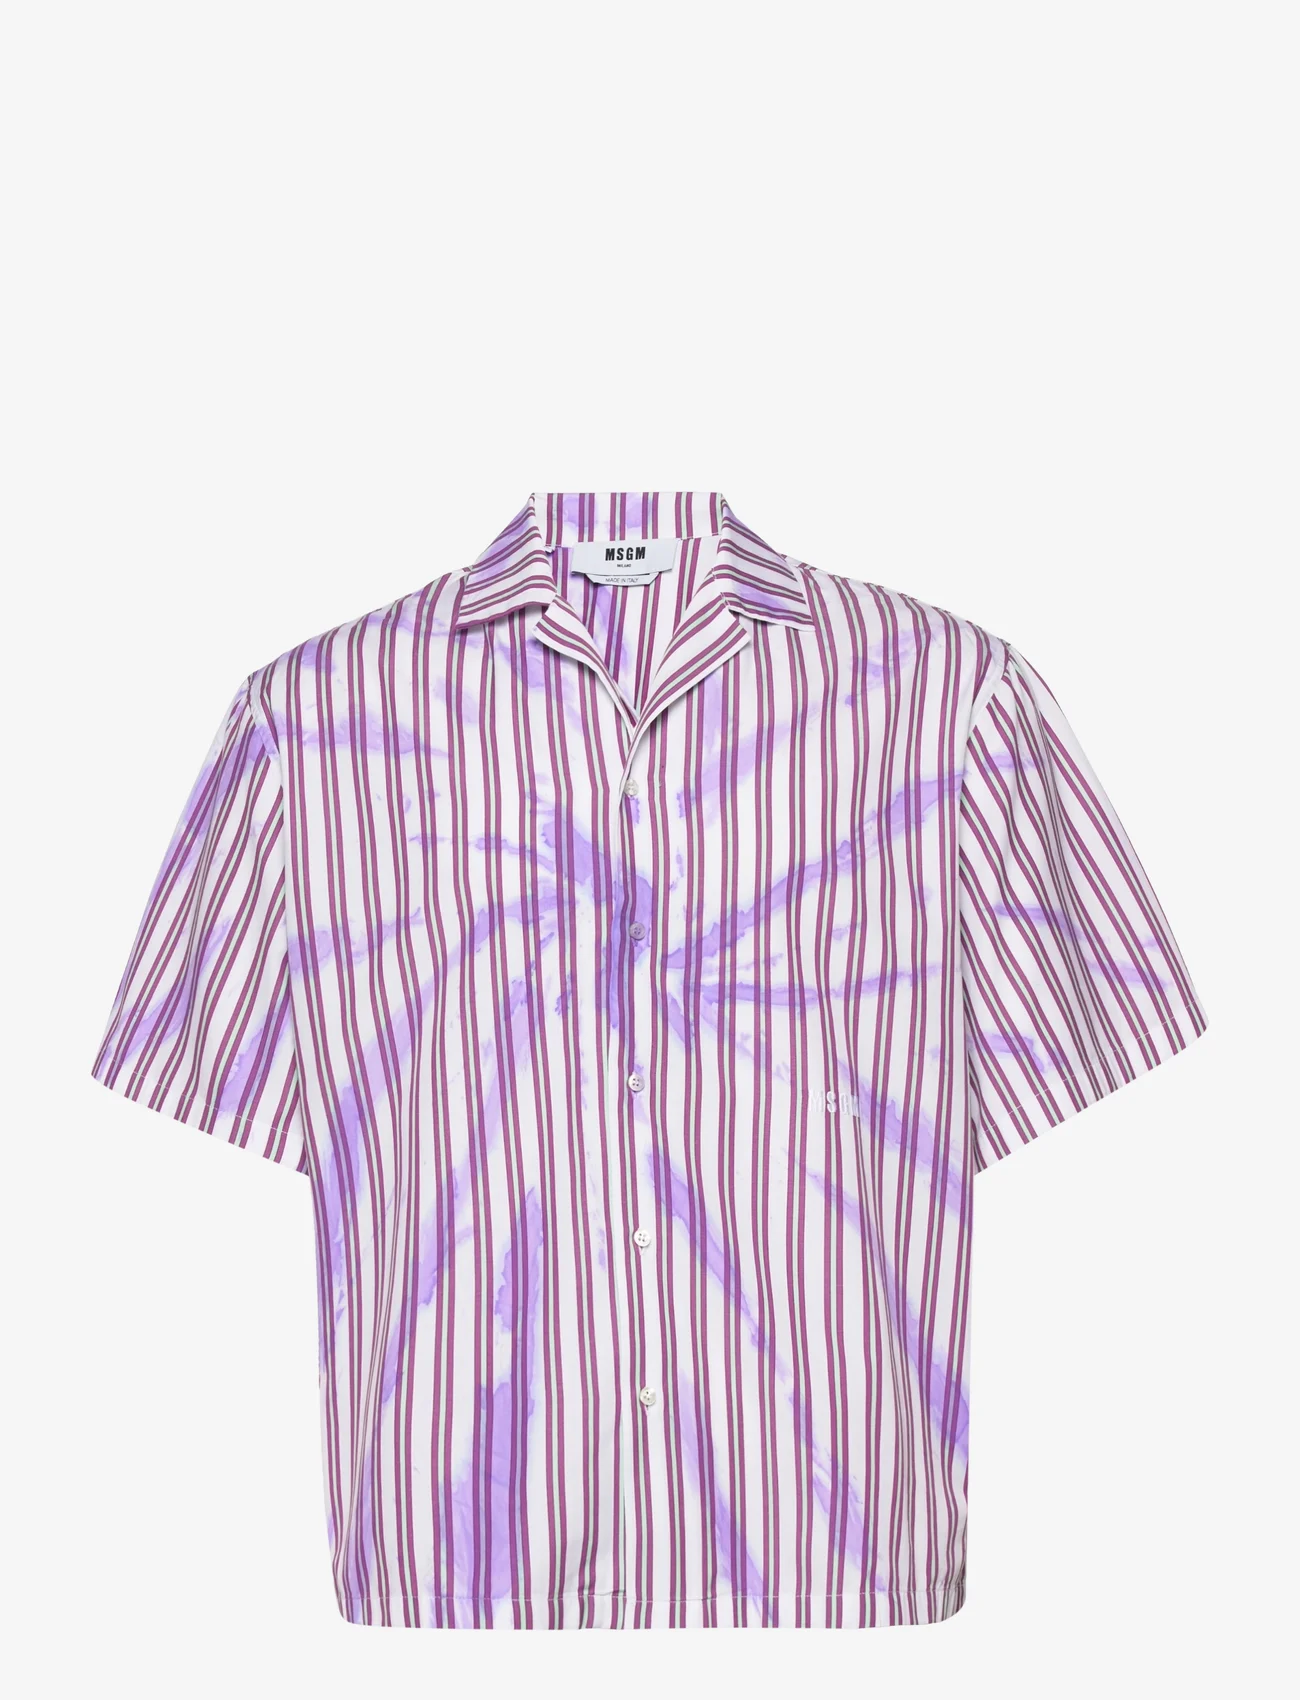 MSGM - CAMICIA/SHIRT - short-sleeved shirts - multi coloured - 0